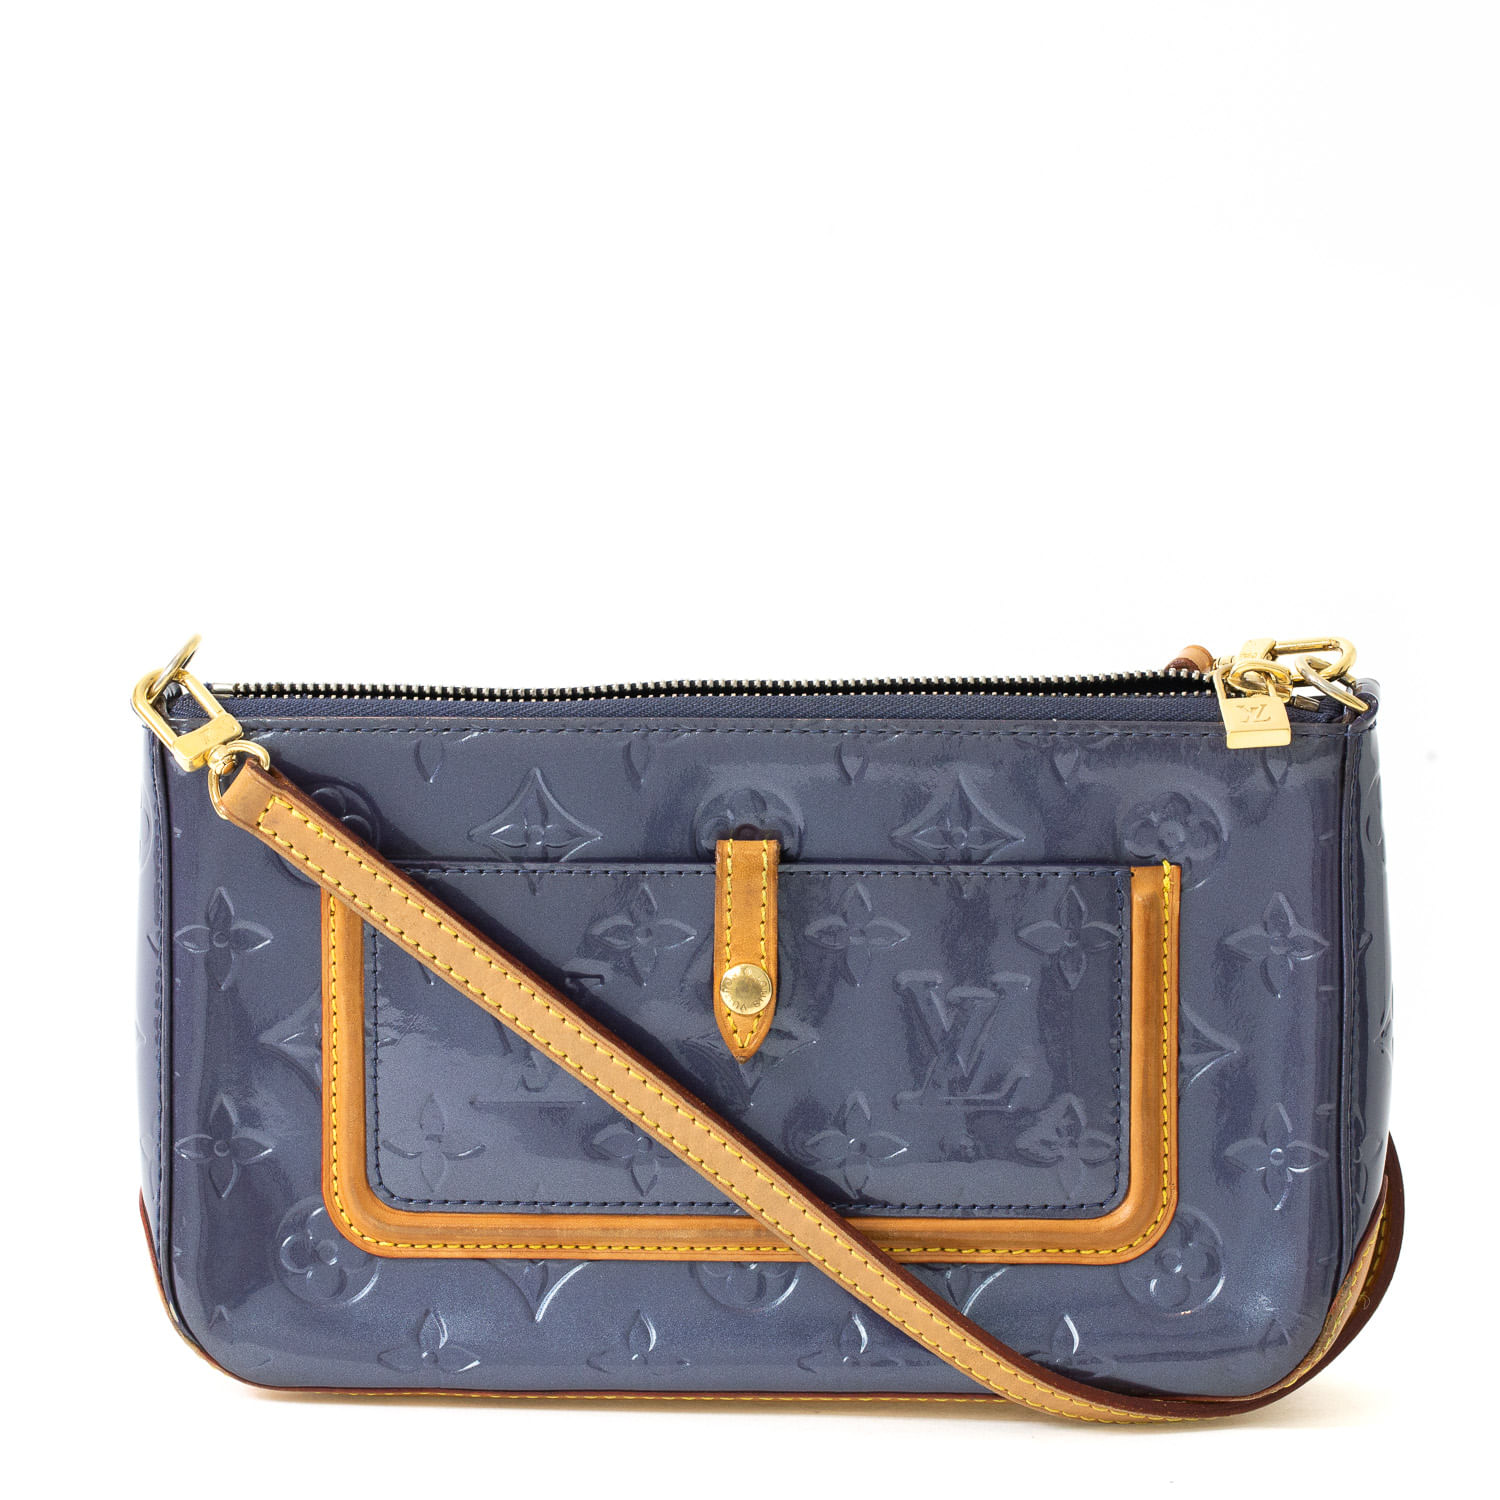 Bolsa Chanel Verniz Azul  Brechó de luxo - Prettynew